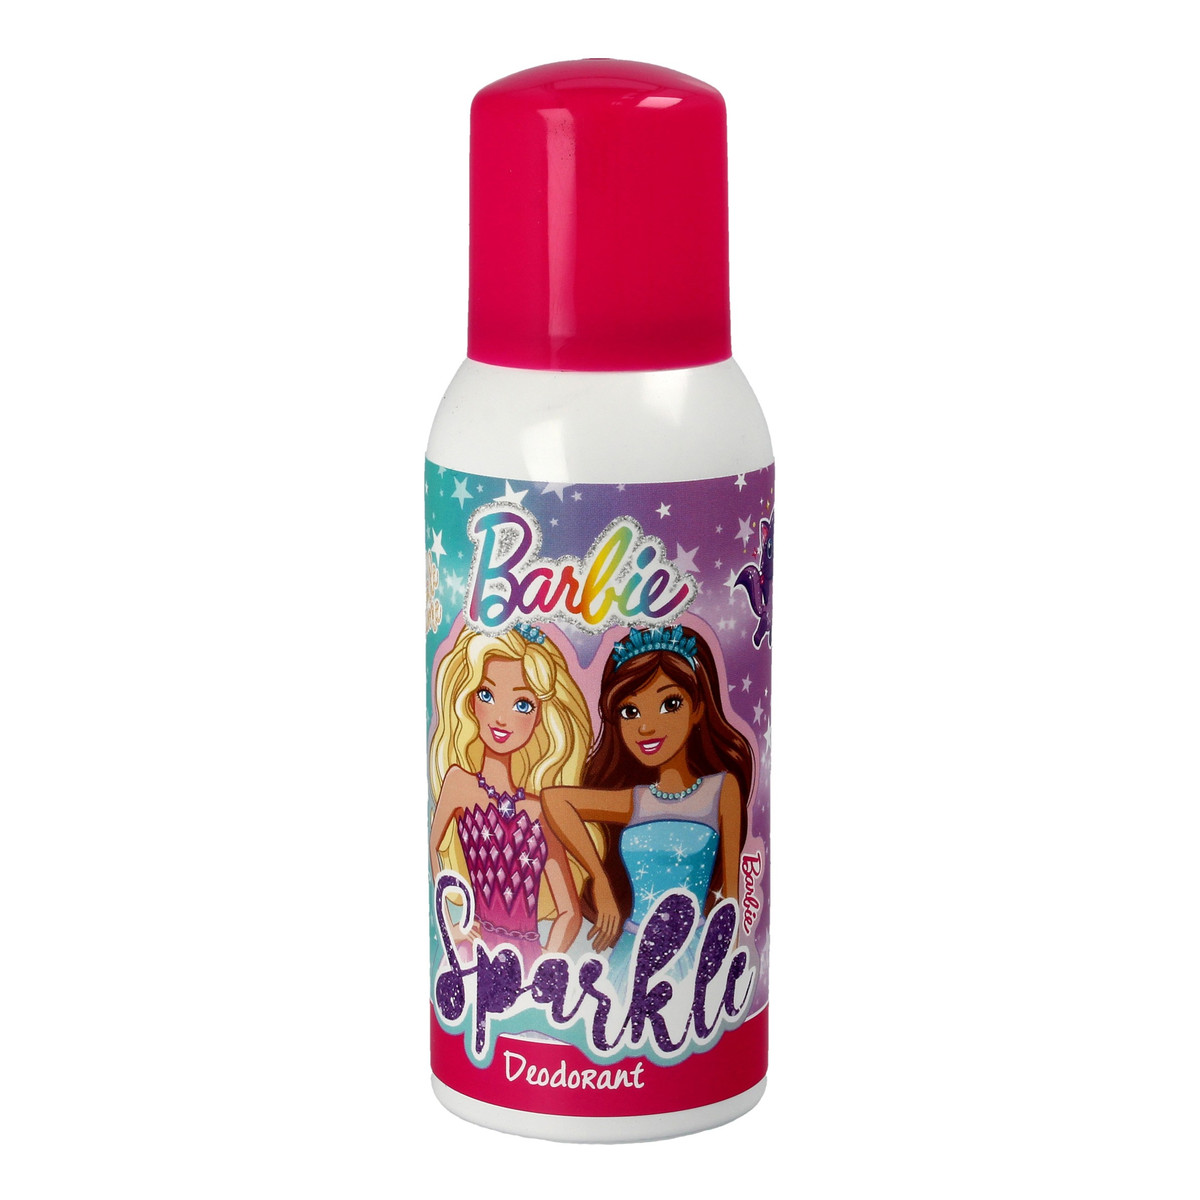 Bi-es Barbie Sparkle dezodorant spray 100ml